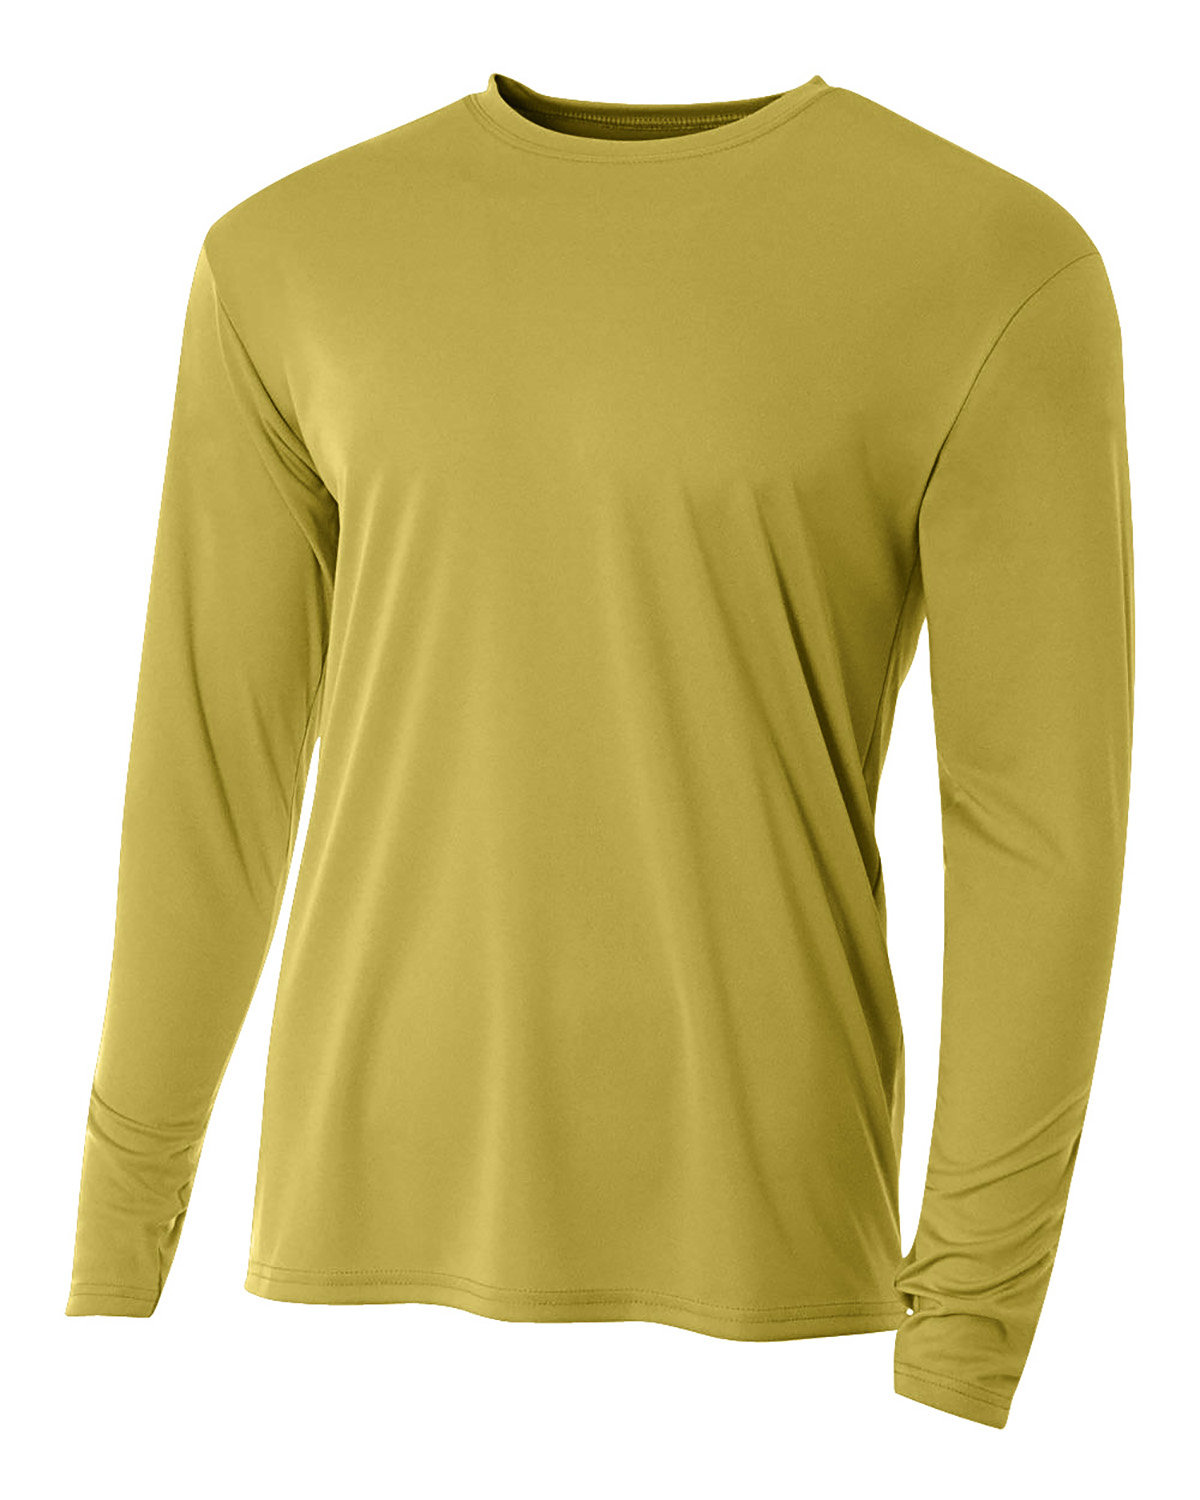 A4 Men's Cooling Performance Long Sleeve T-Shirt vegas gold 